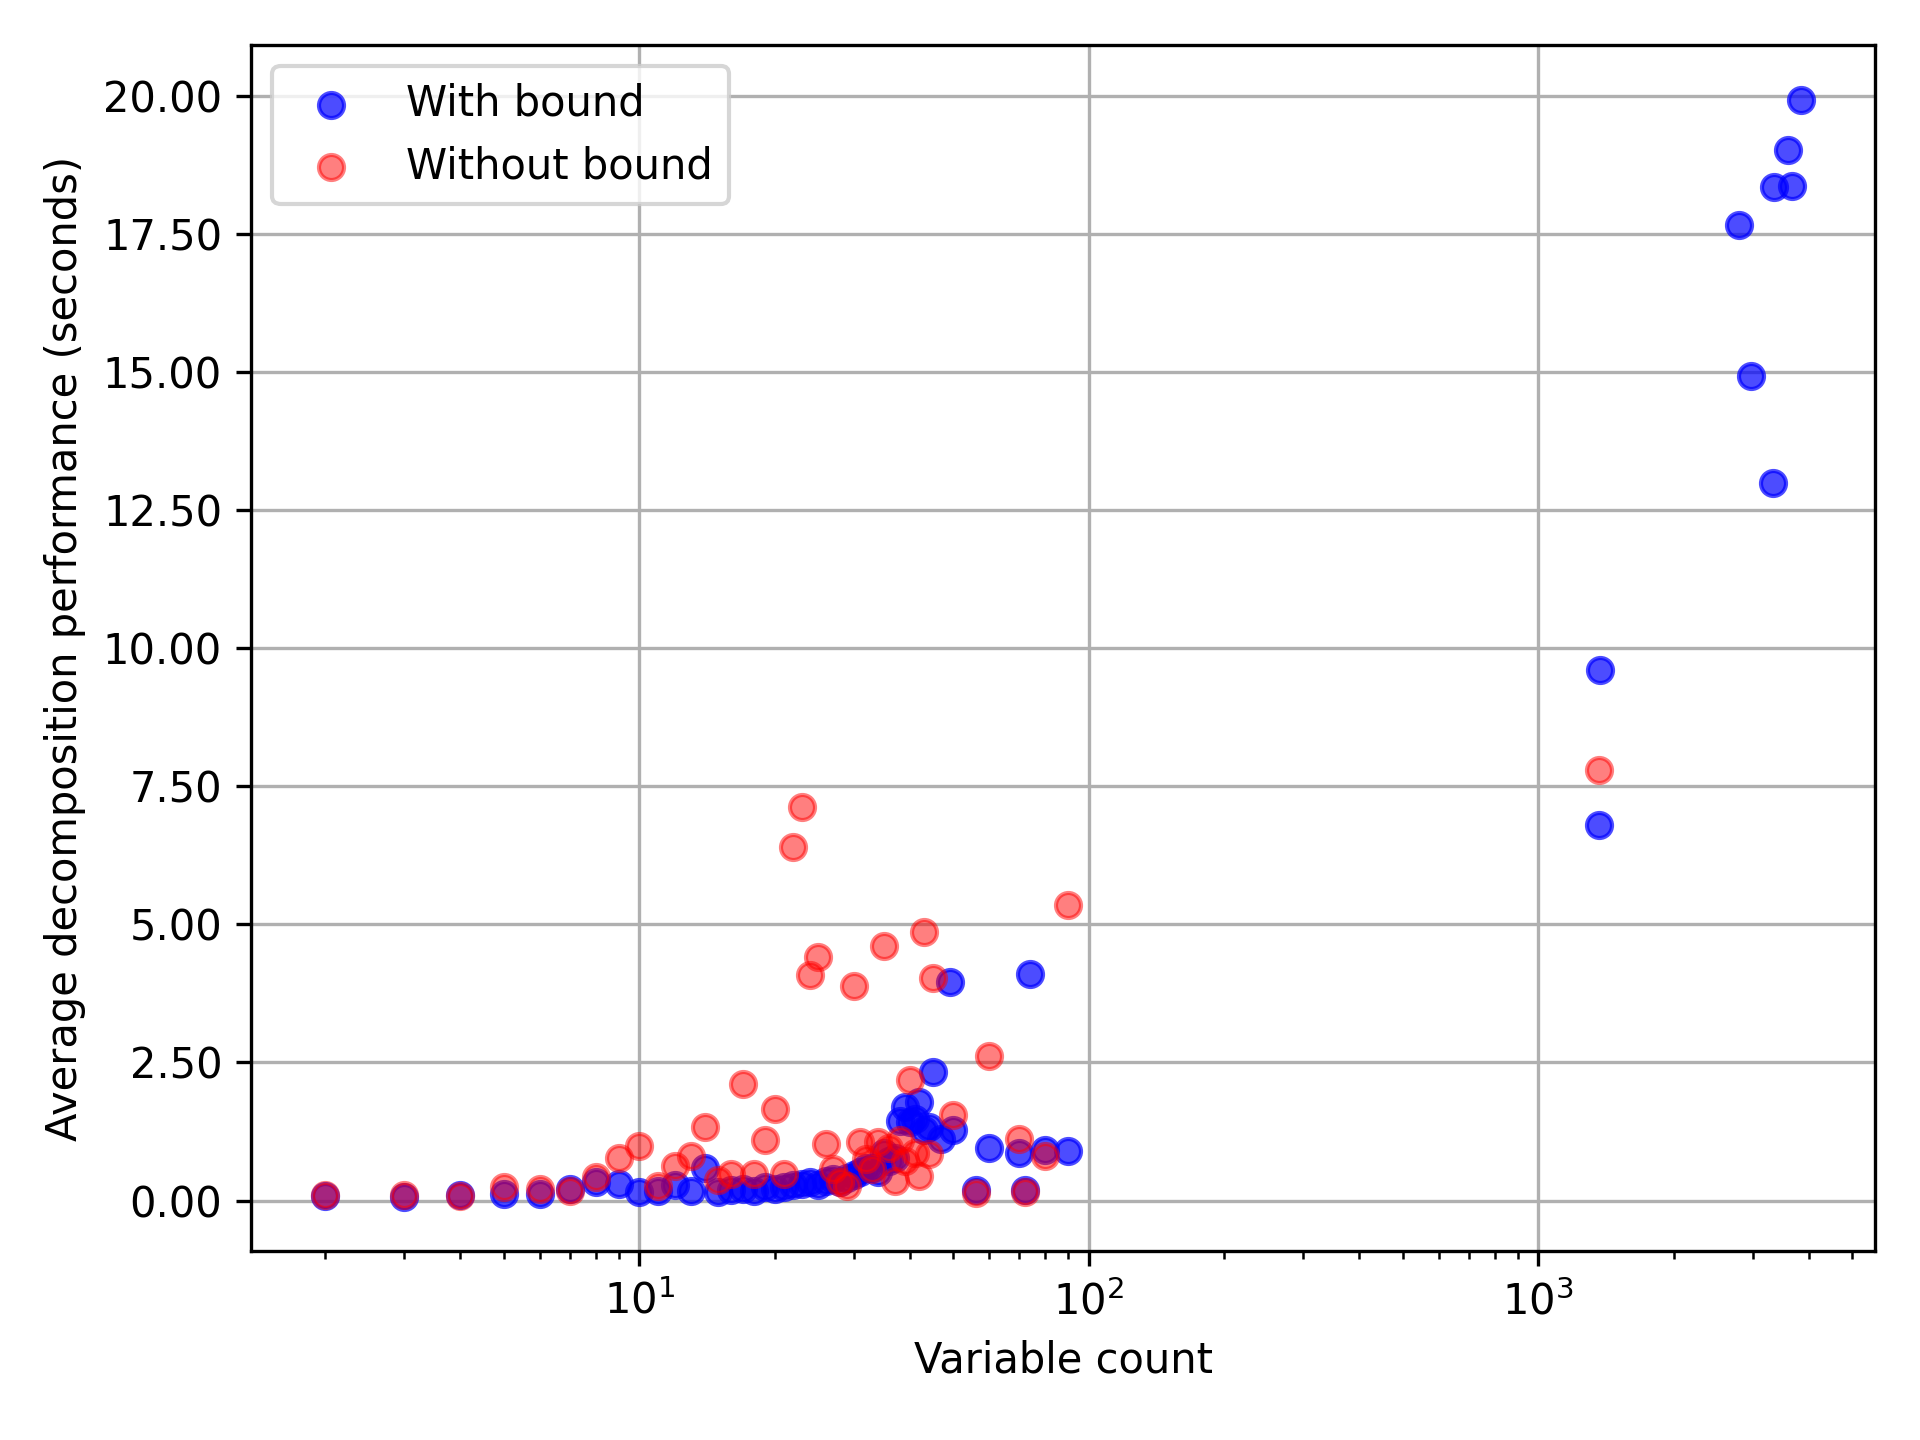 variable count and average mondec performance comparison